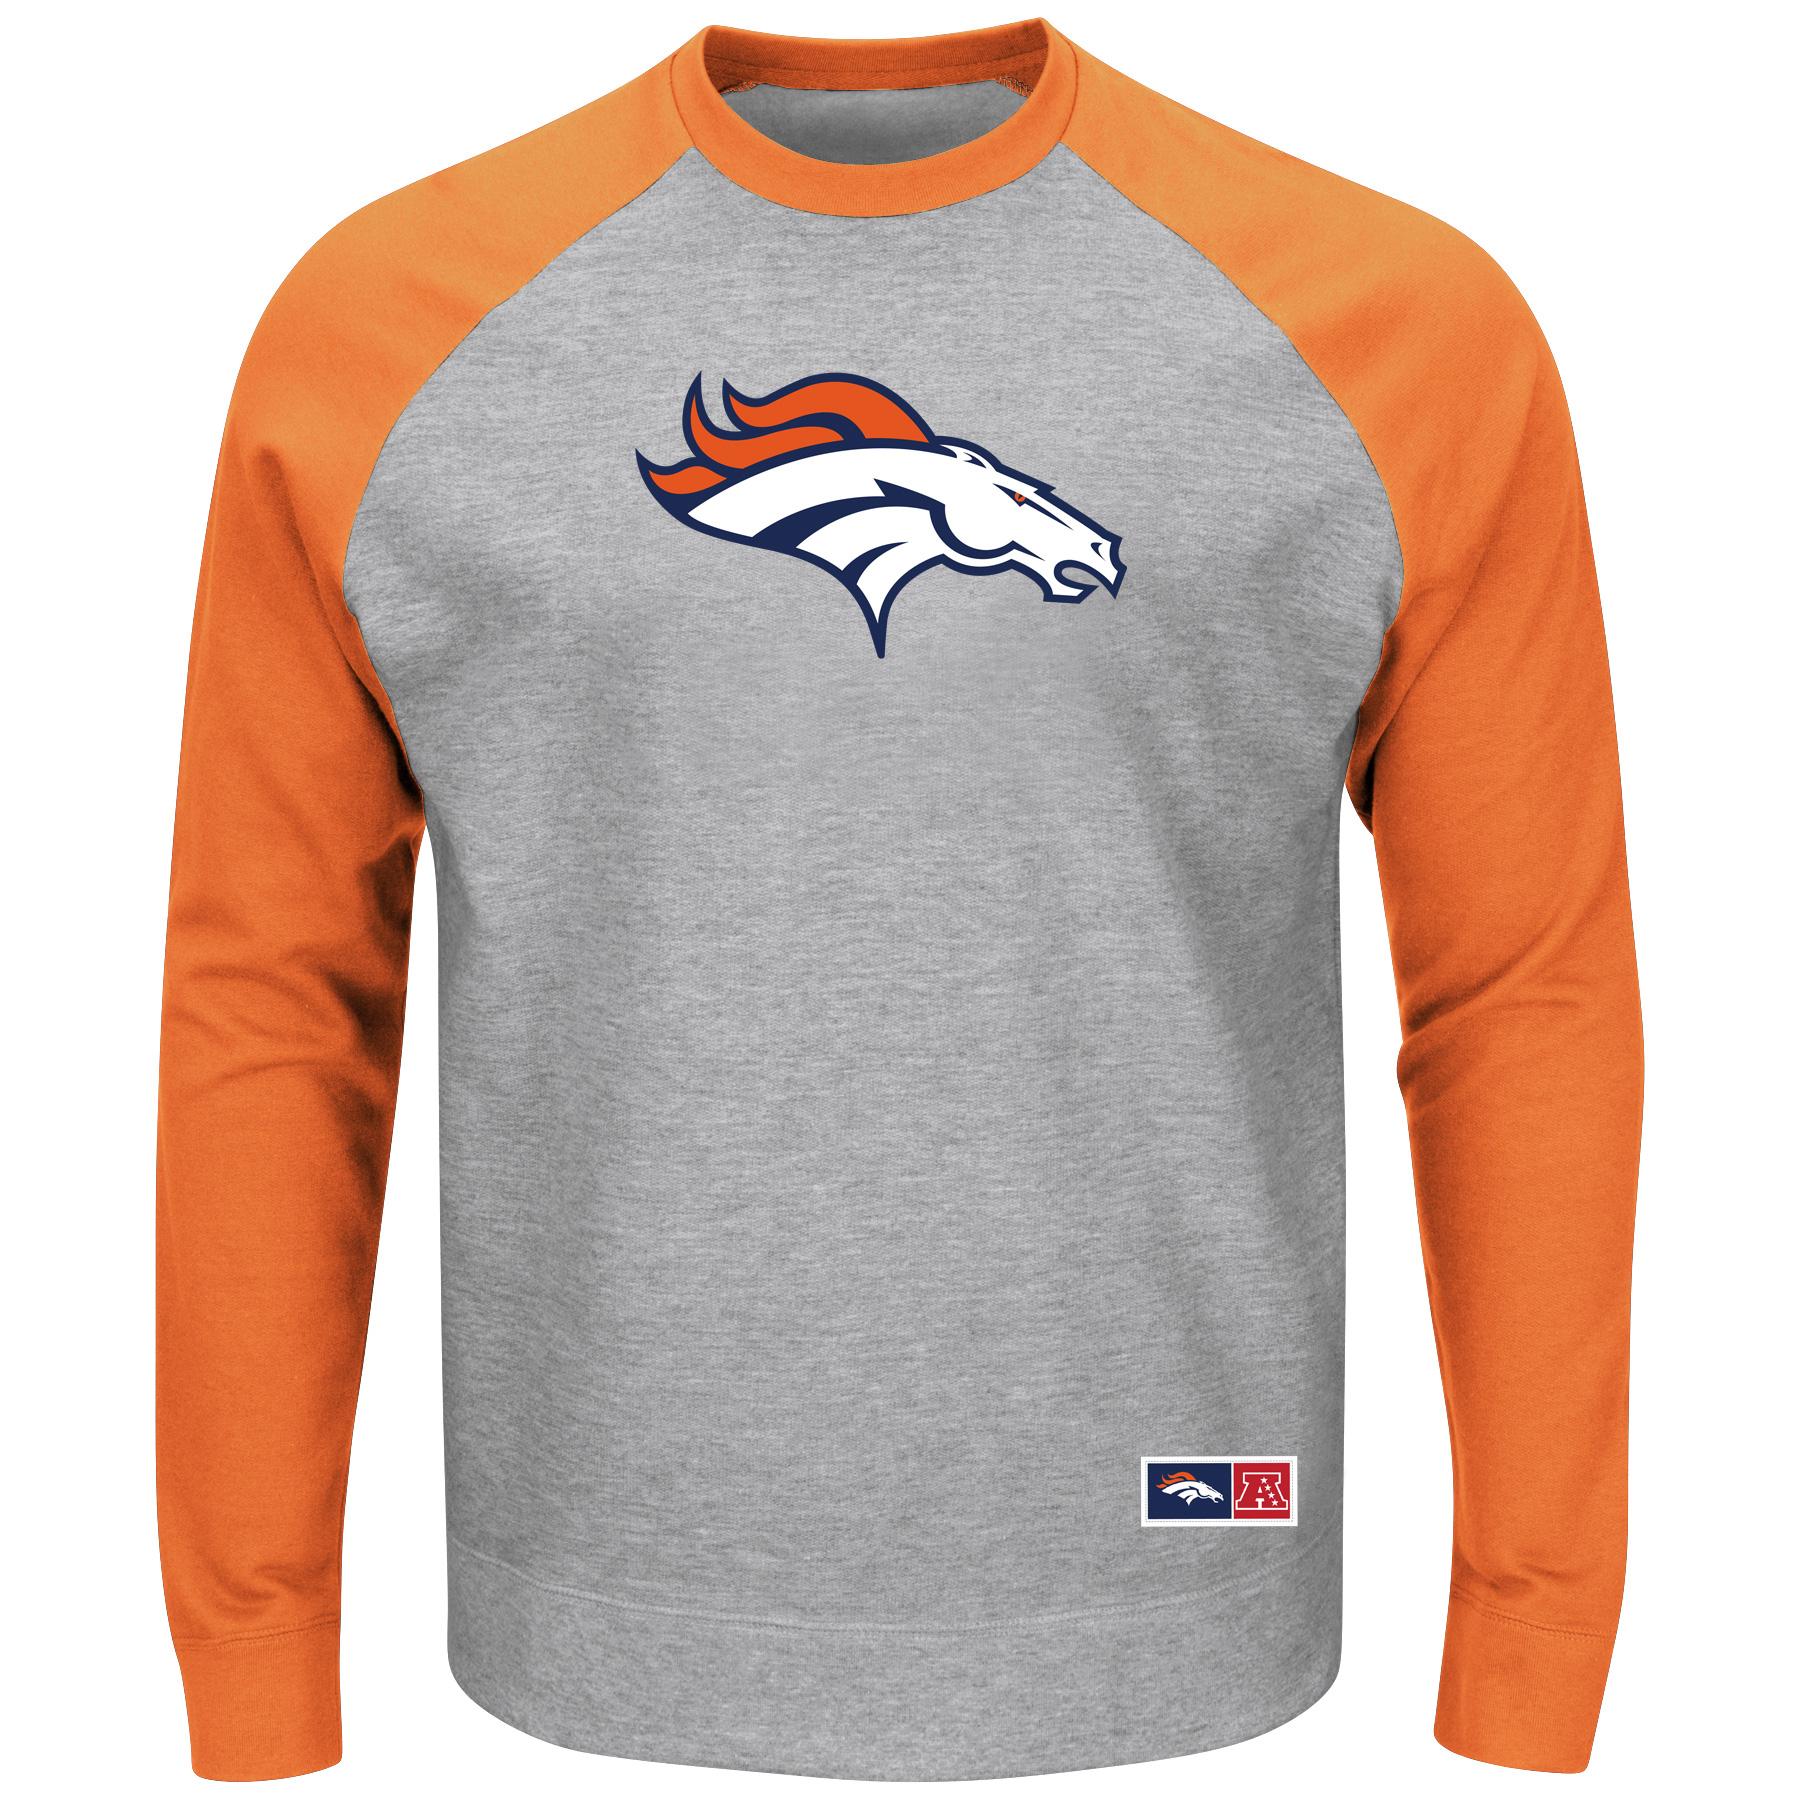 NFL Men's Big & Tall Sweatshirt - Denver Broncos